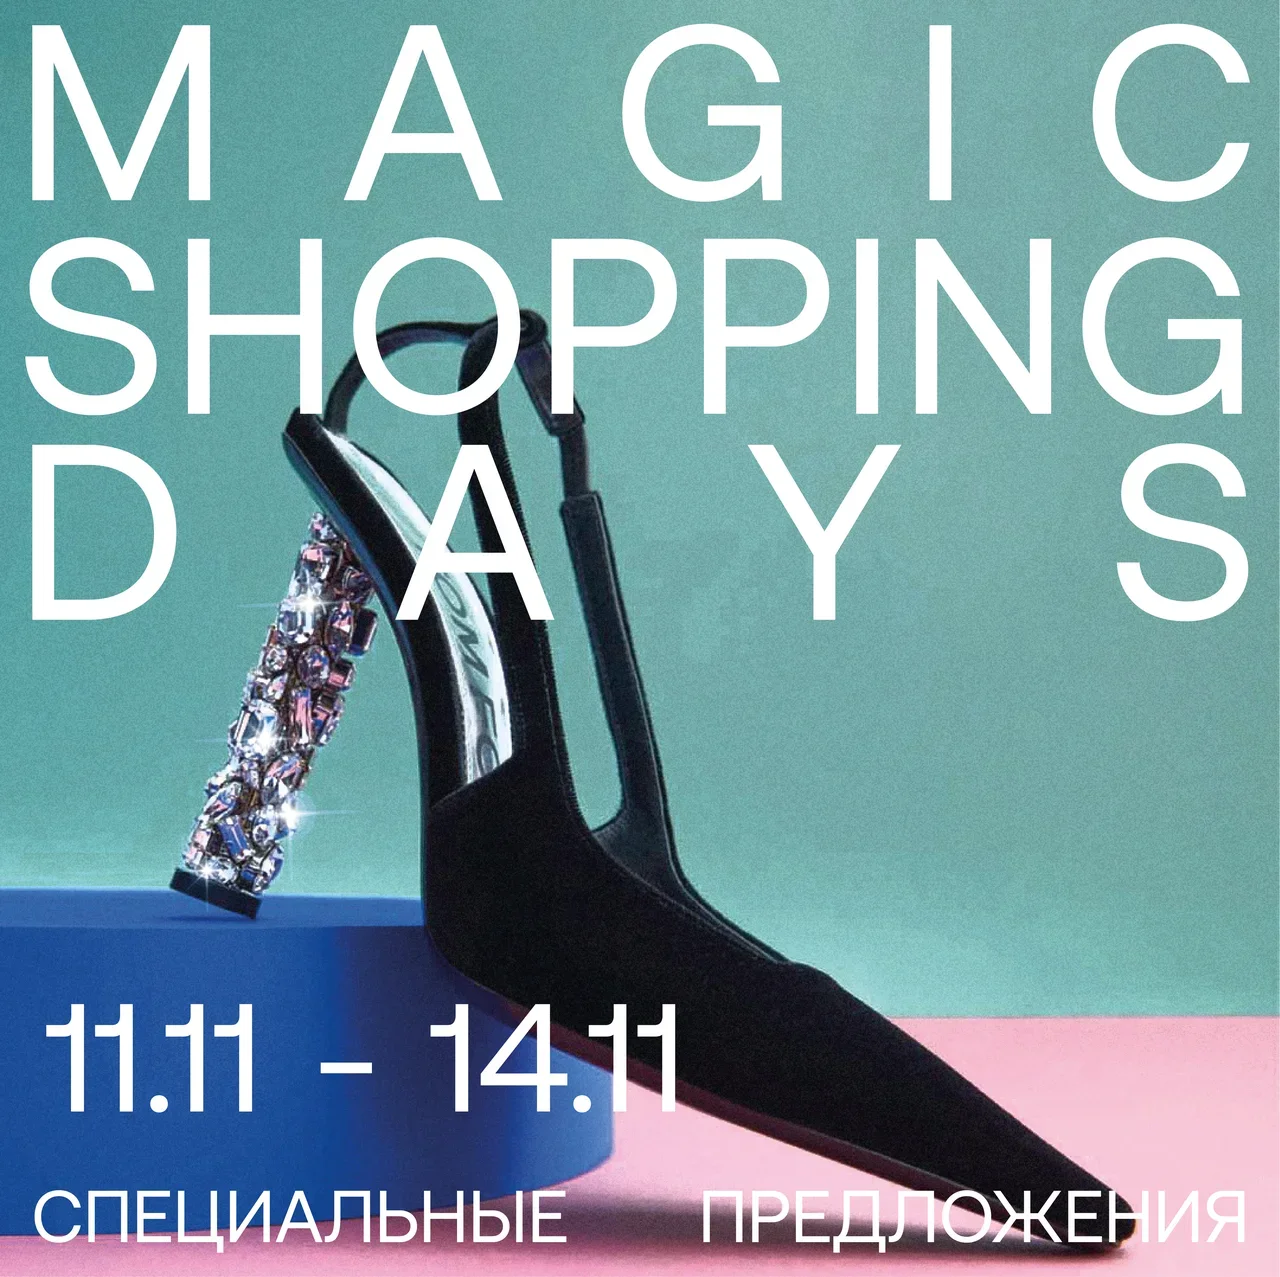 Magic shopping days